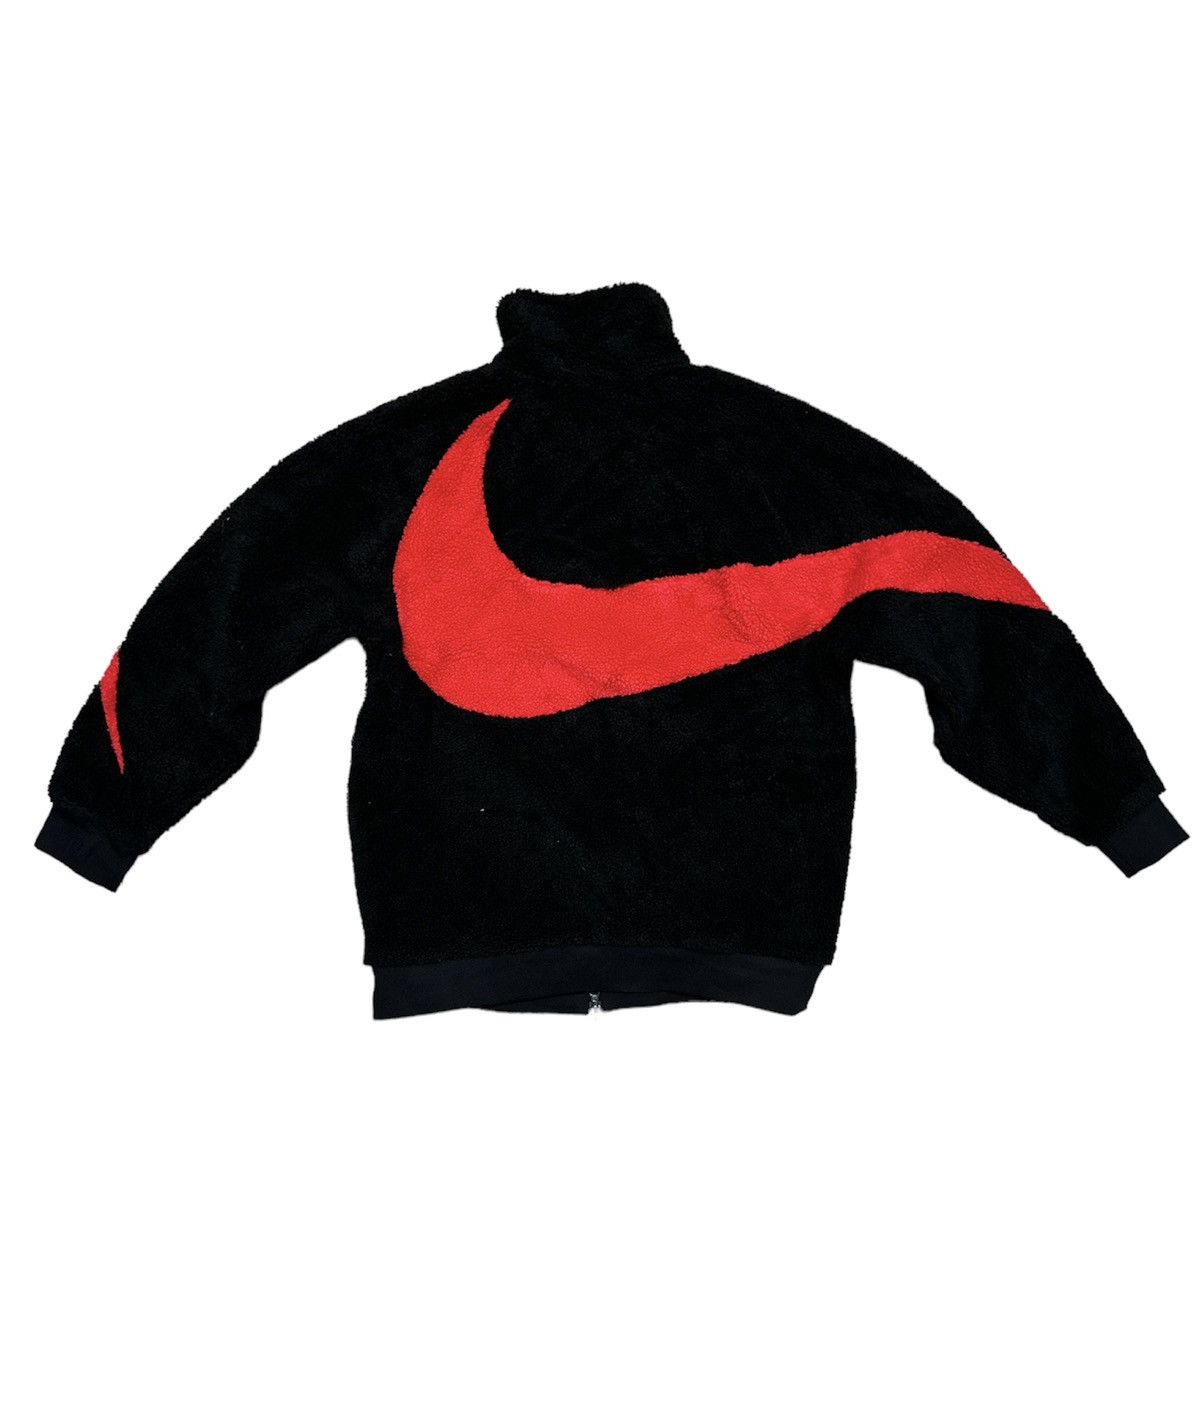 Rare Nike Sherpa Jacket Riversible Big Swoosh Design - 2